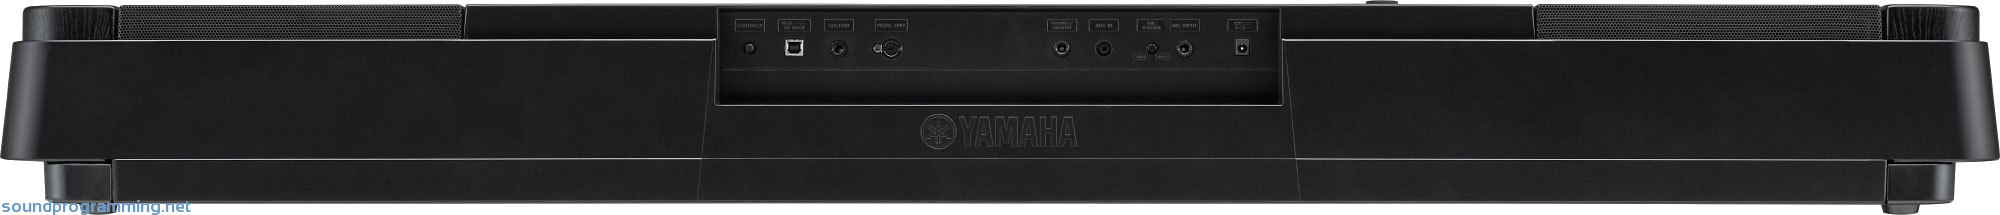 Yamaha DGX-660 Black Back View